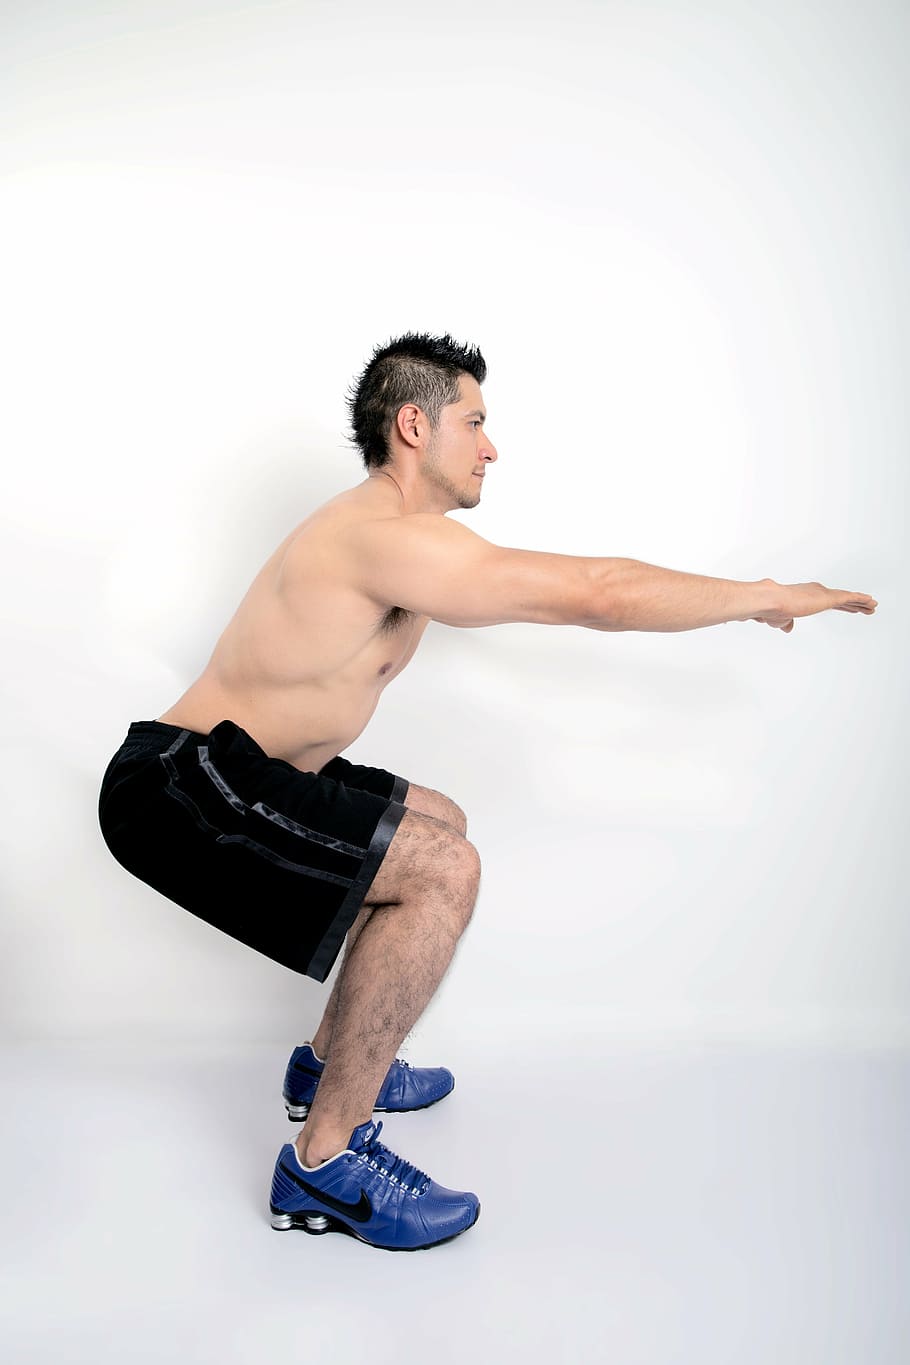 man in black shorts doing exercise trick, fitness, model, shirtless